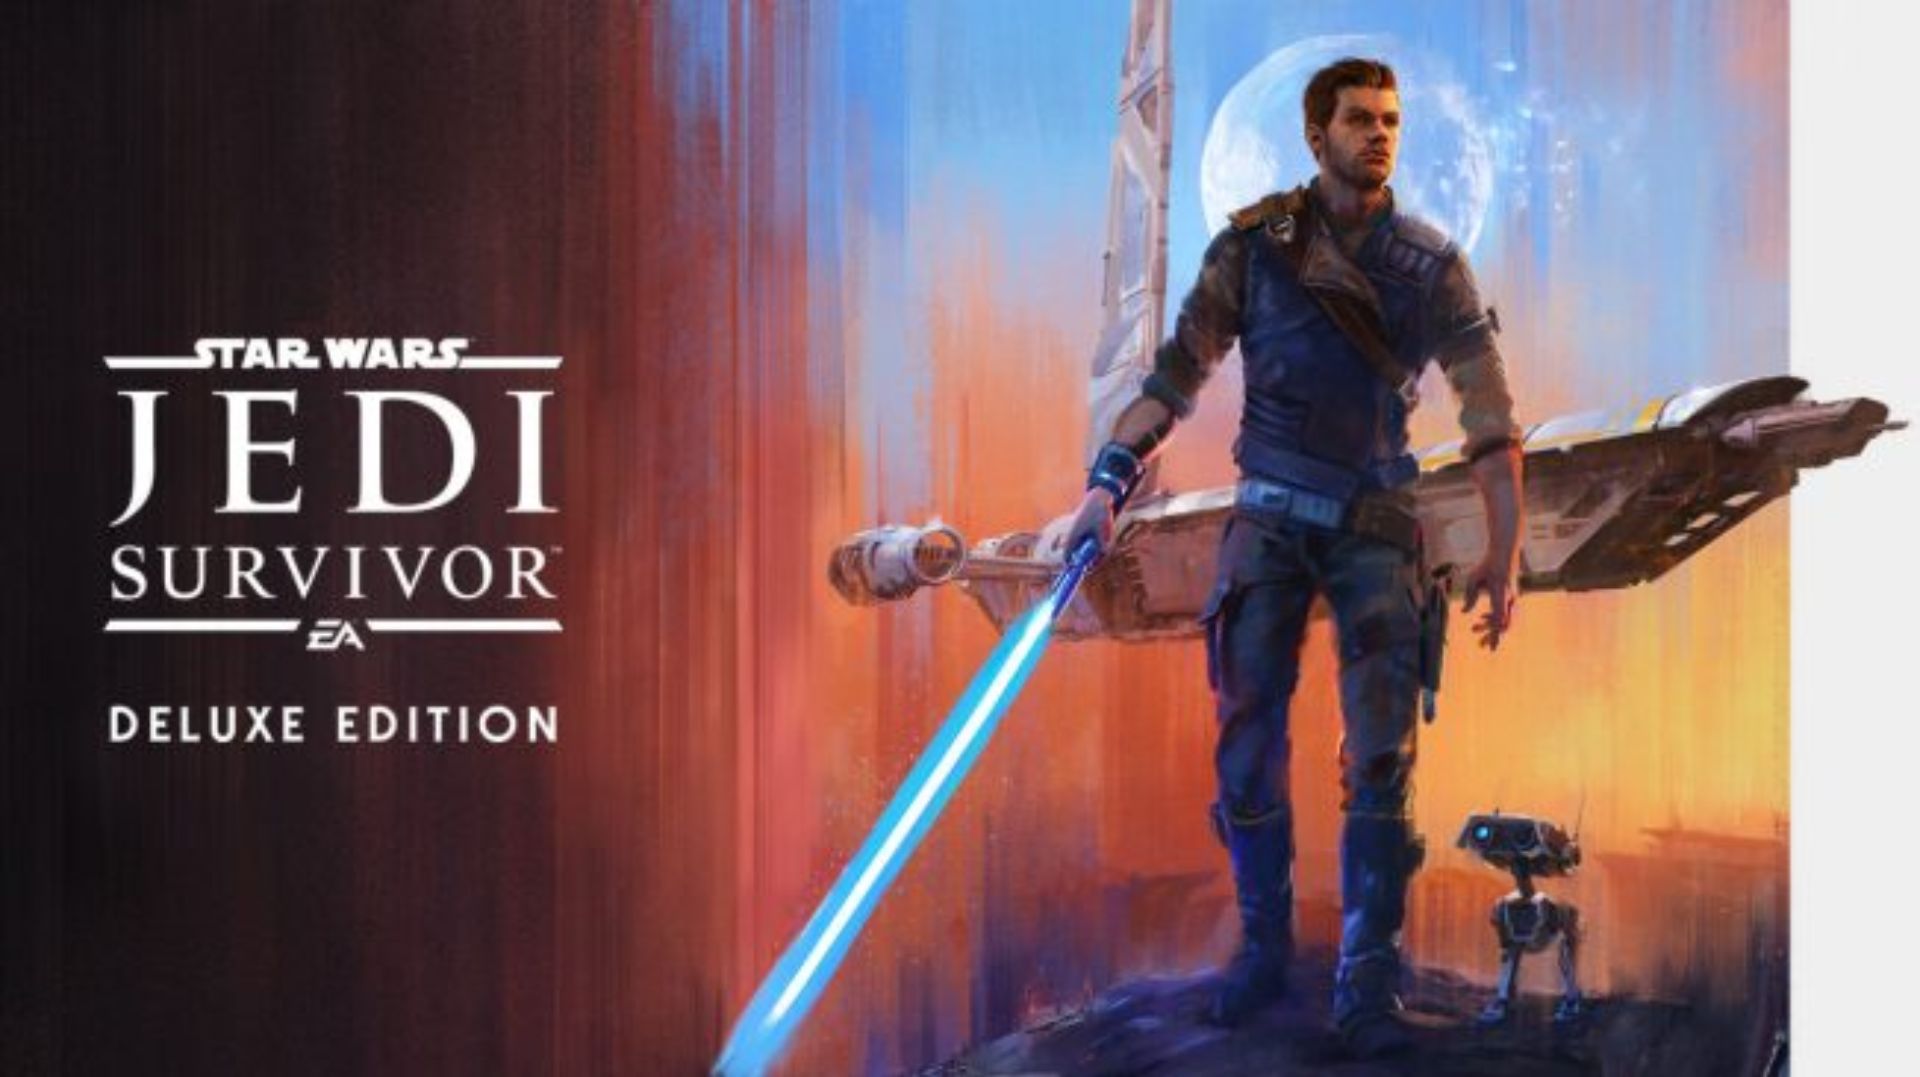 Star Wars Jedi: Survivor release date revealed